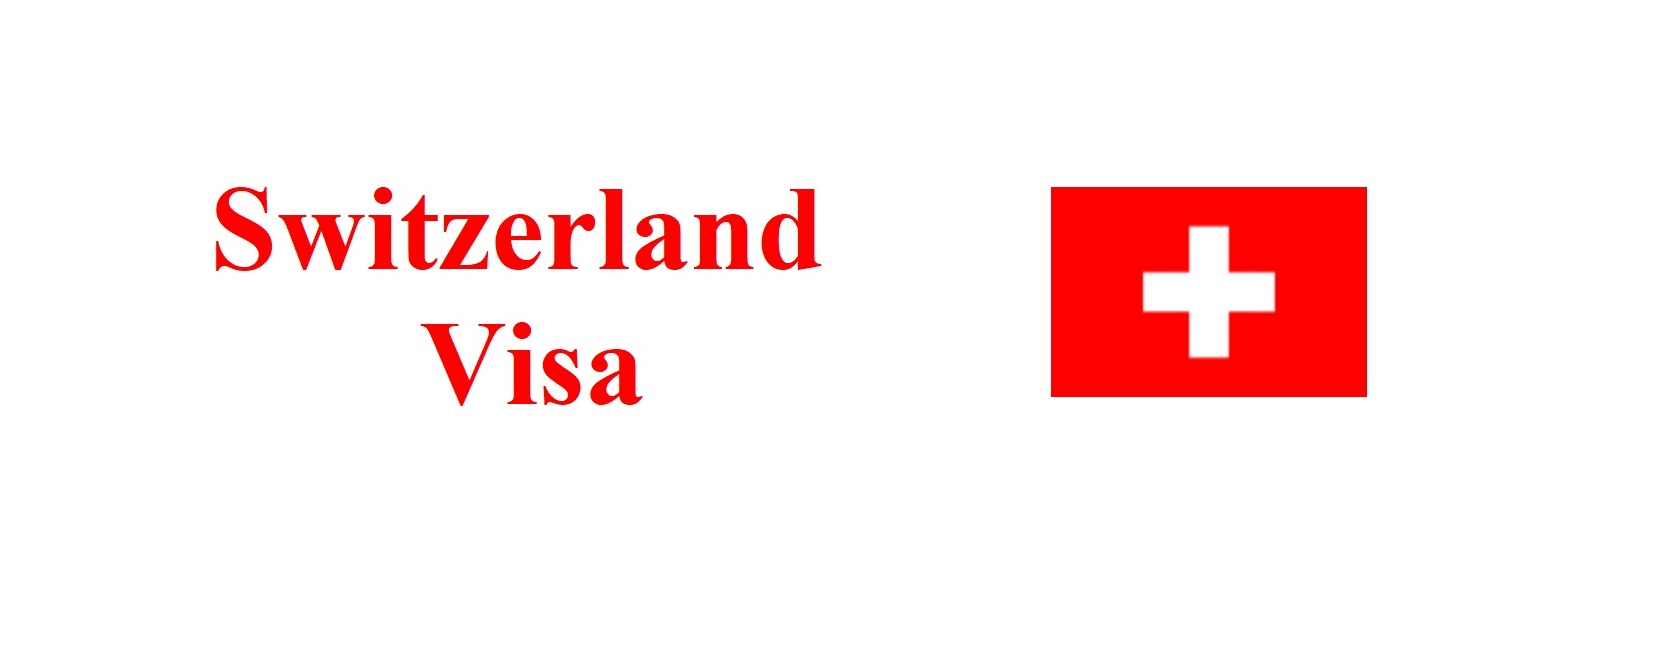 Switzerland Visa Policy